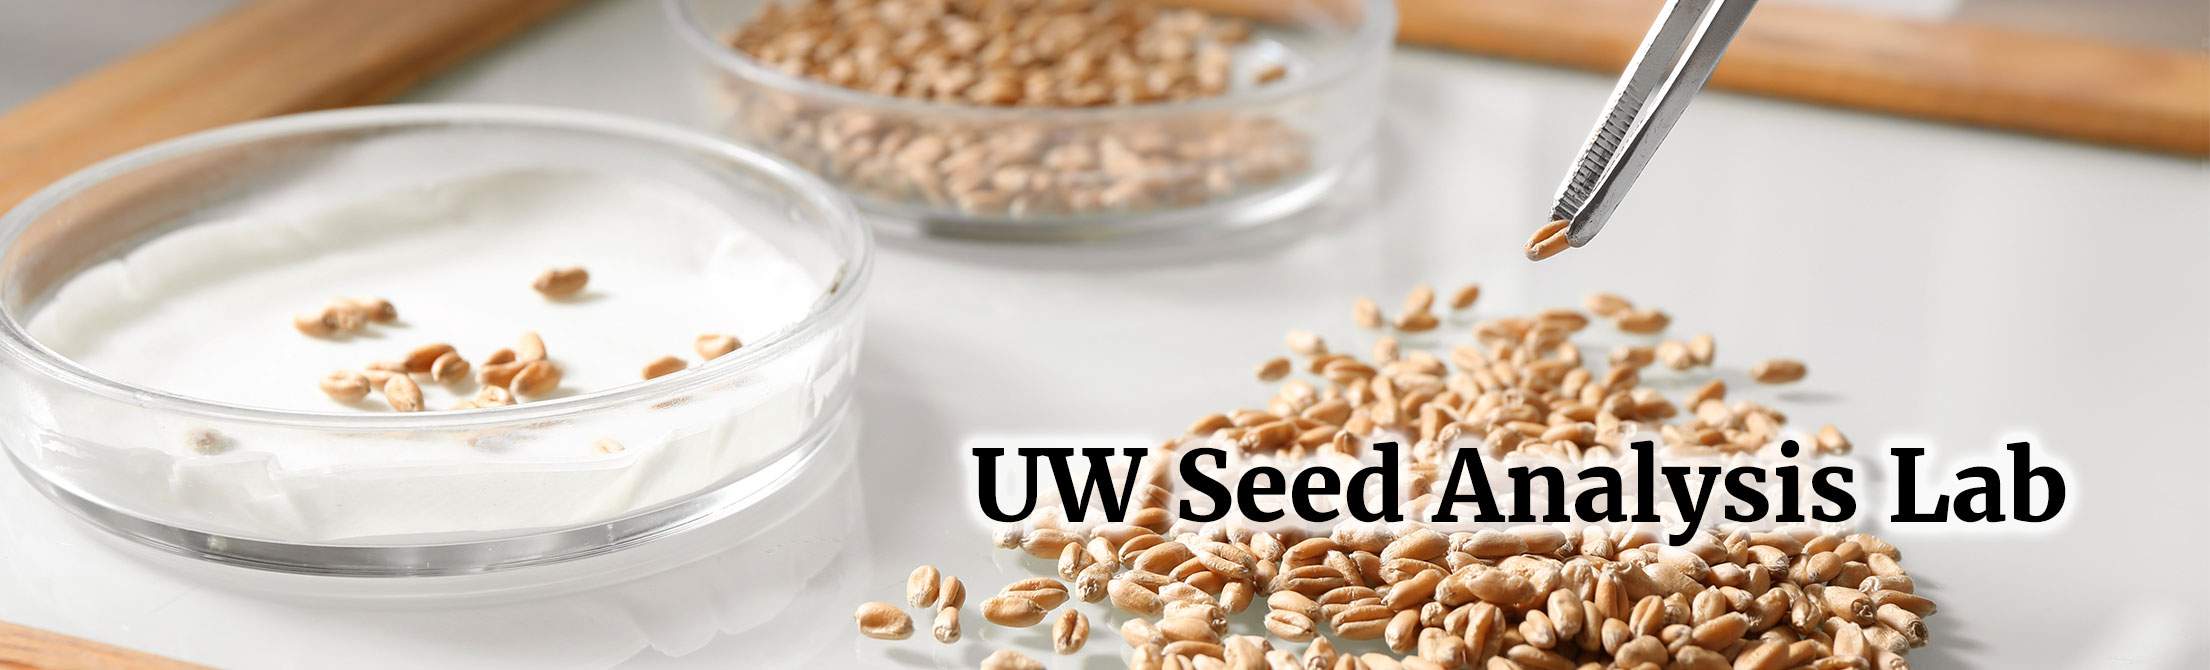 UW Seed Analysis Lab